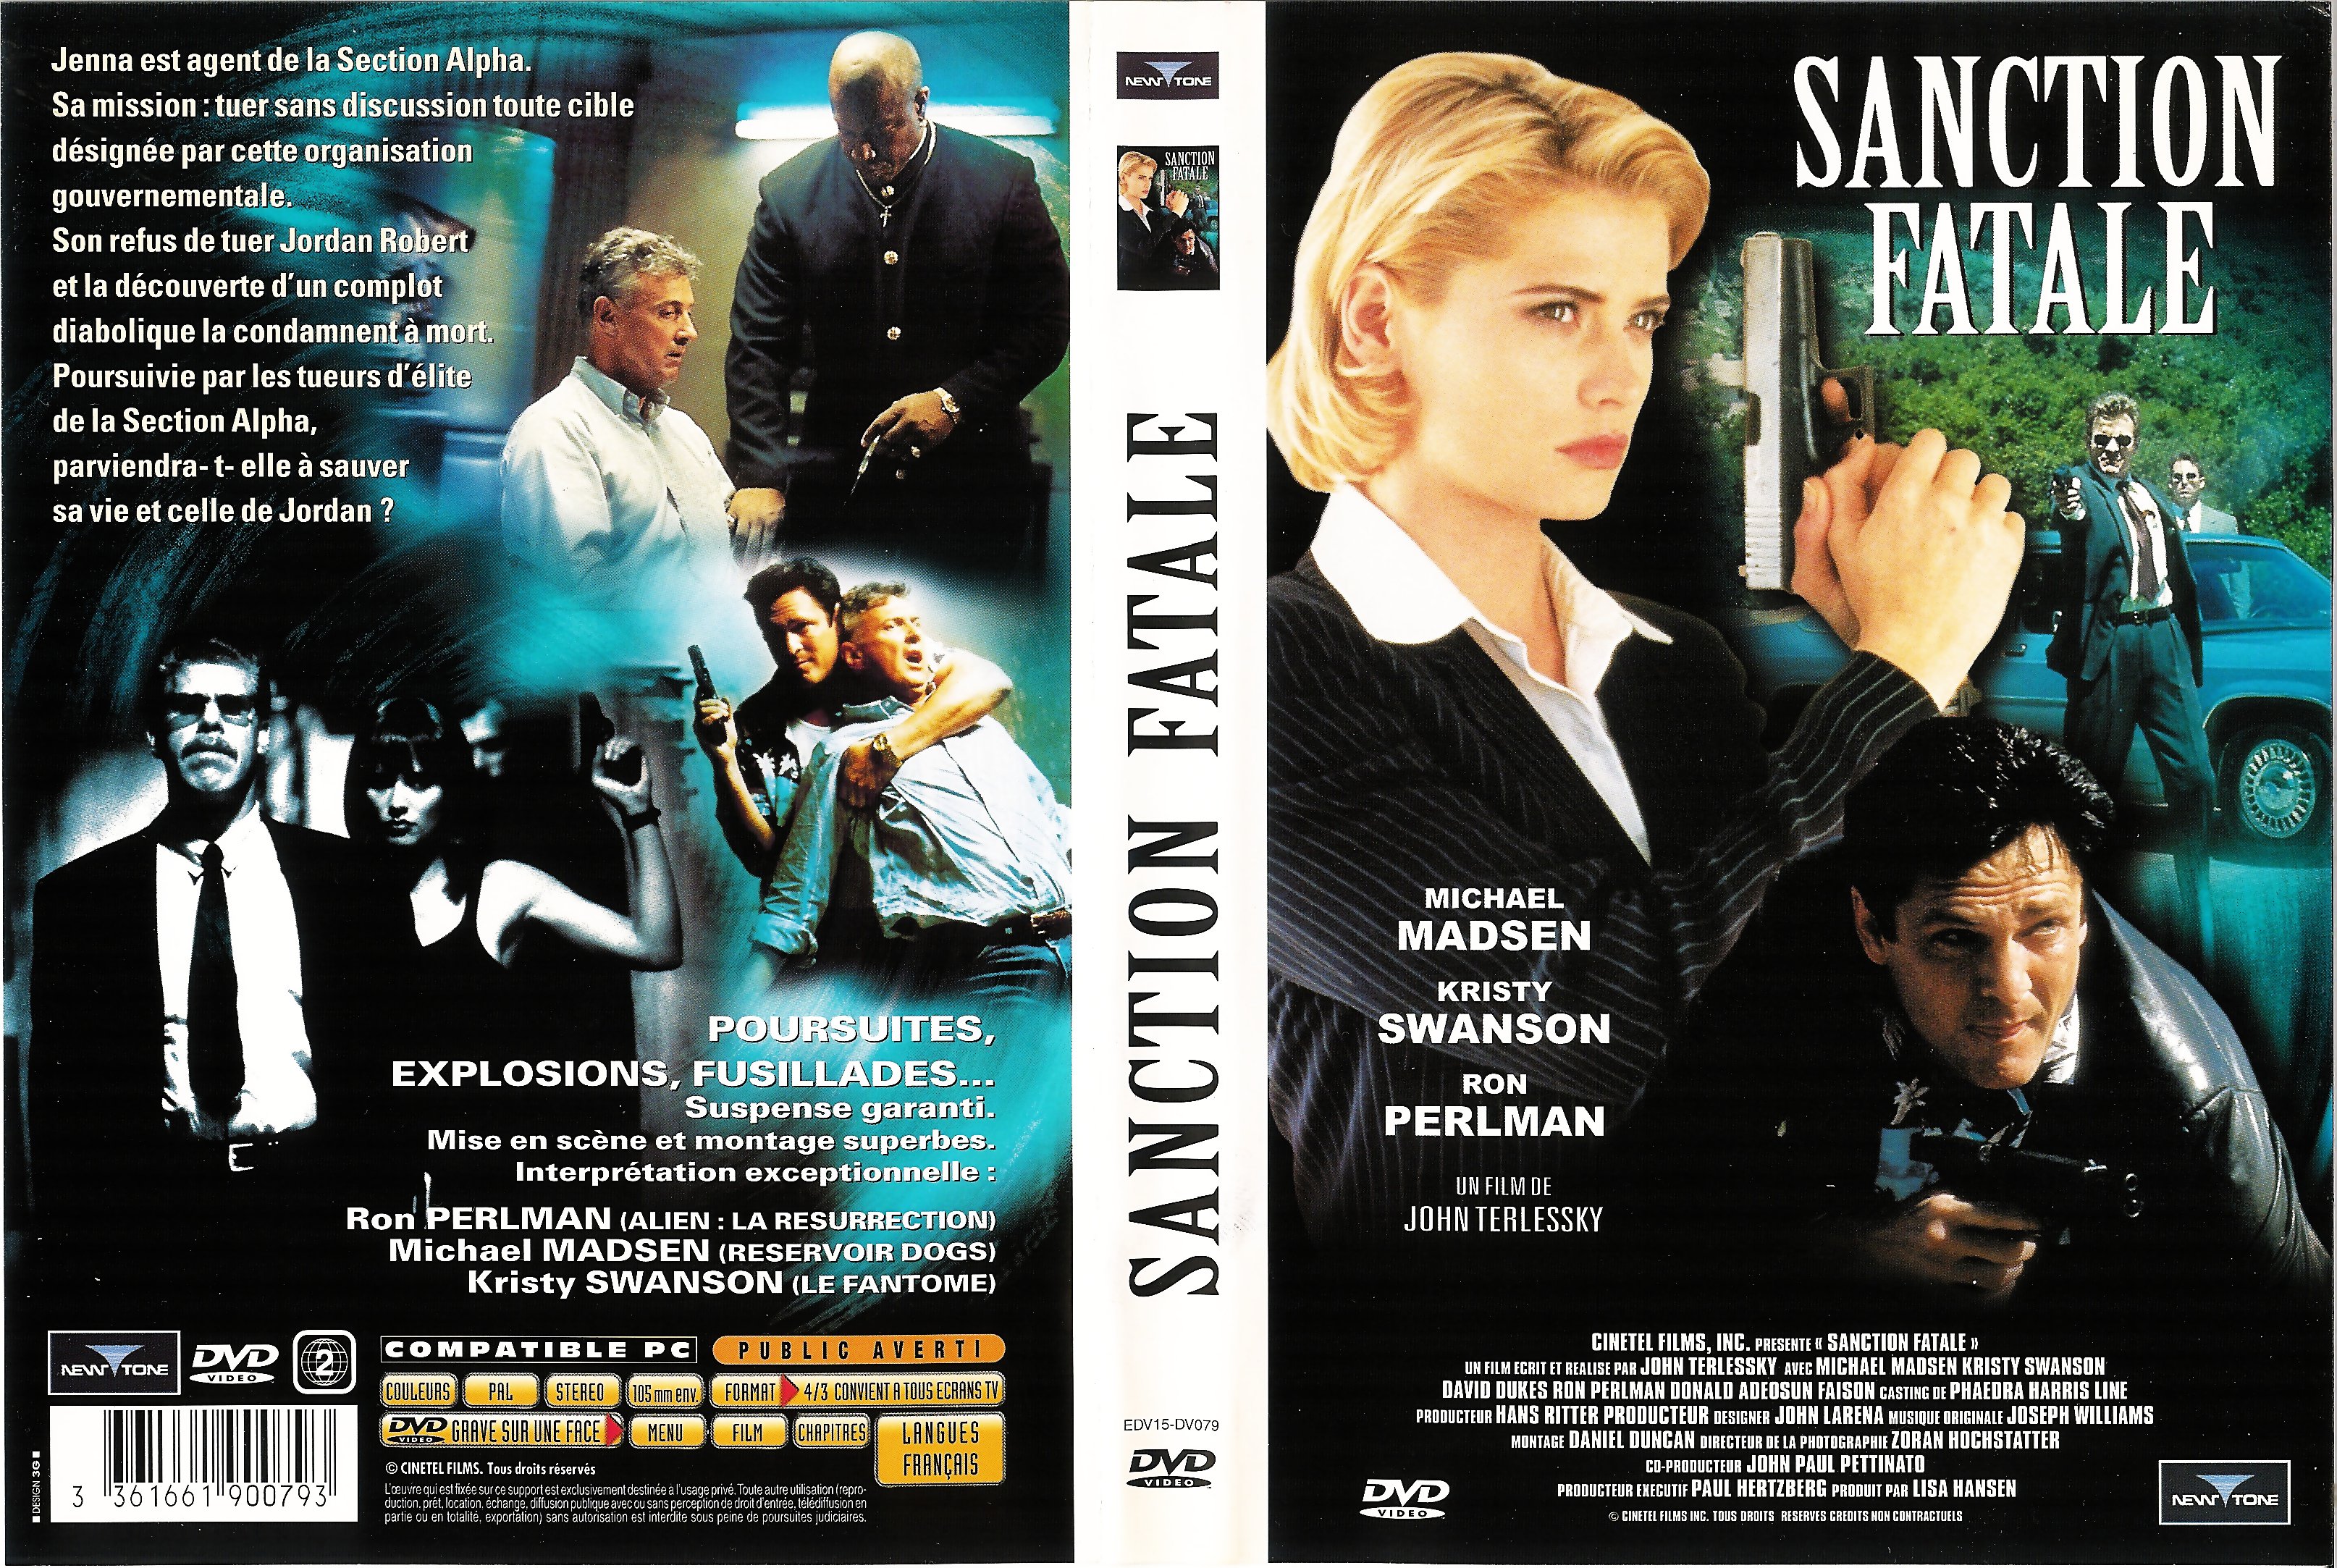 Jaquette DVD Sanction fatale v2